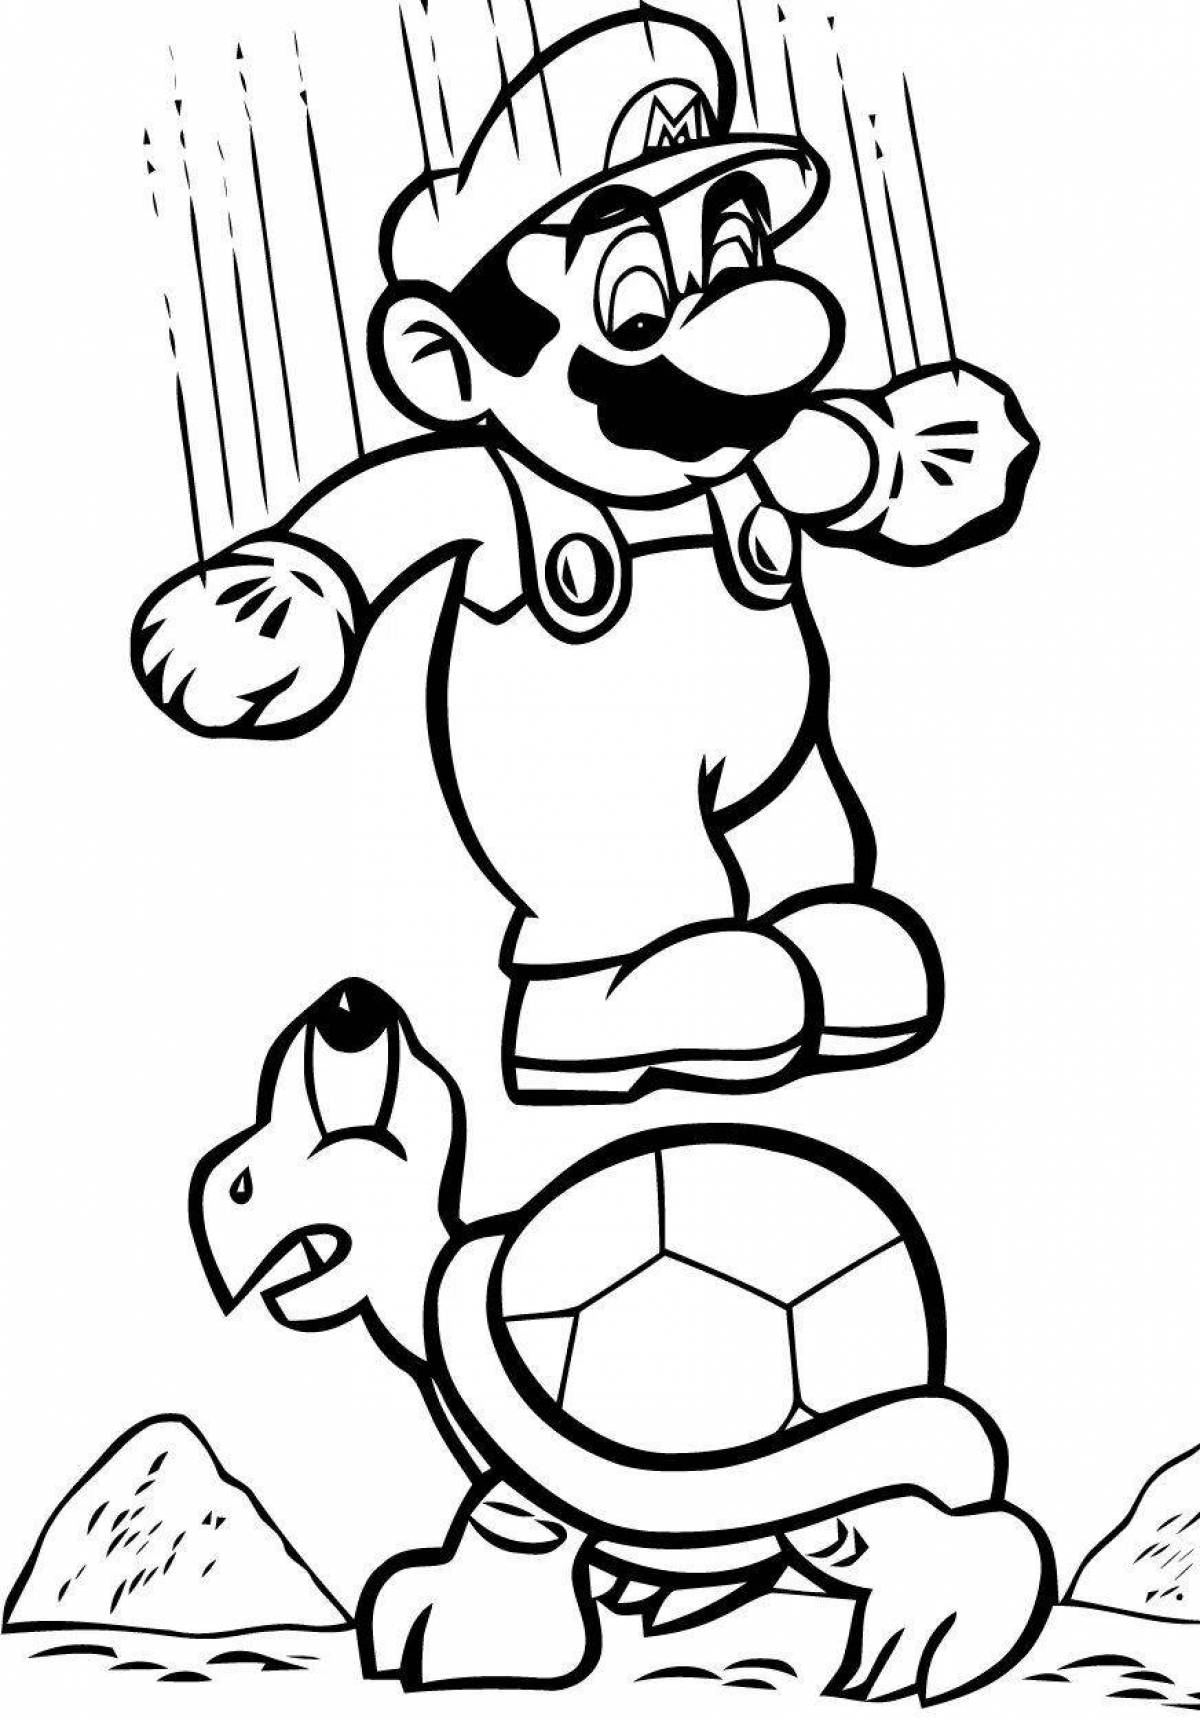 Mario coloring game